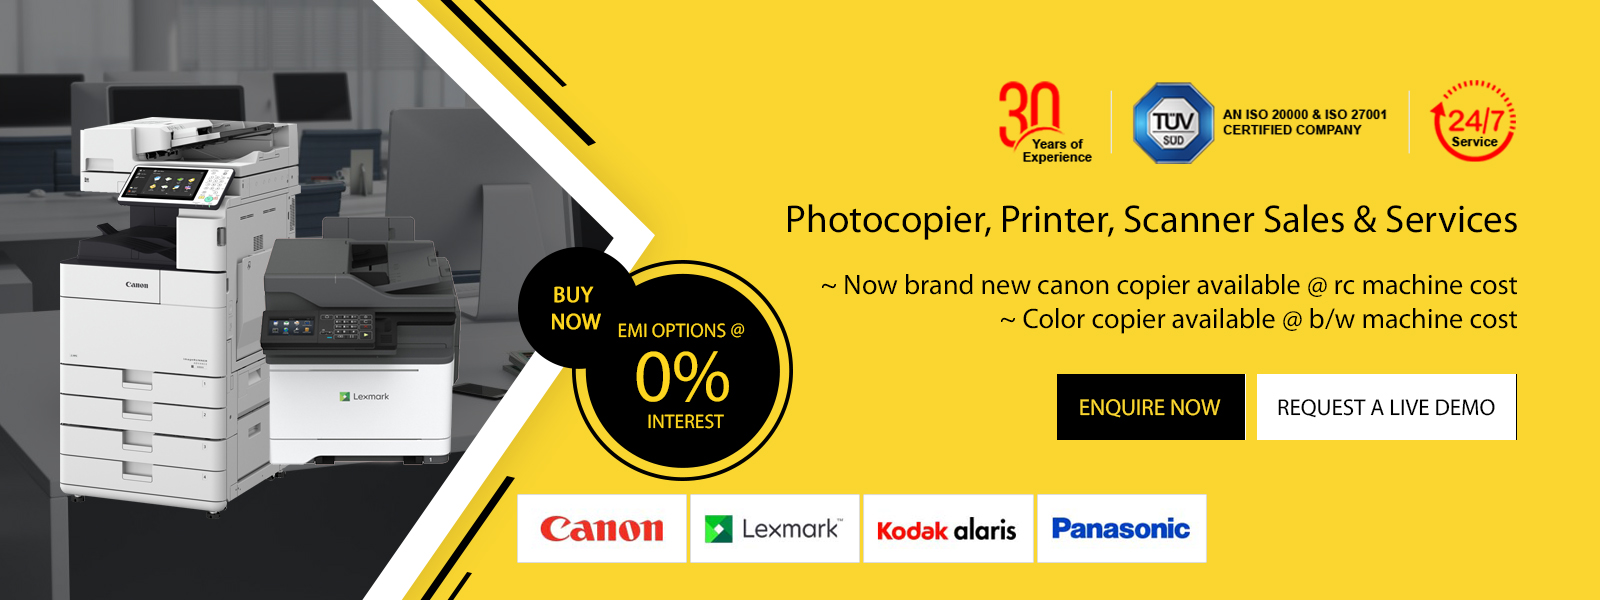 Canon Copier Dealer in Bangalore, Chennai, Hyderabad